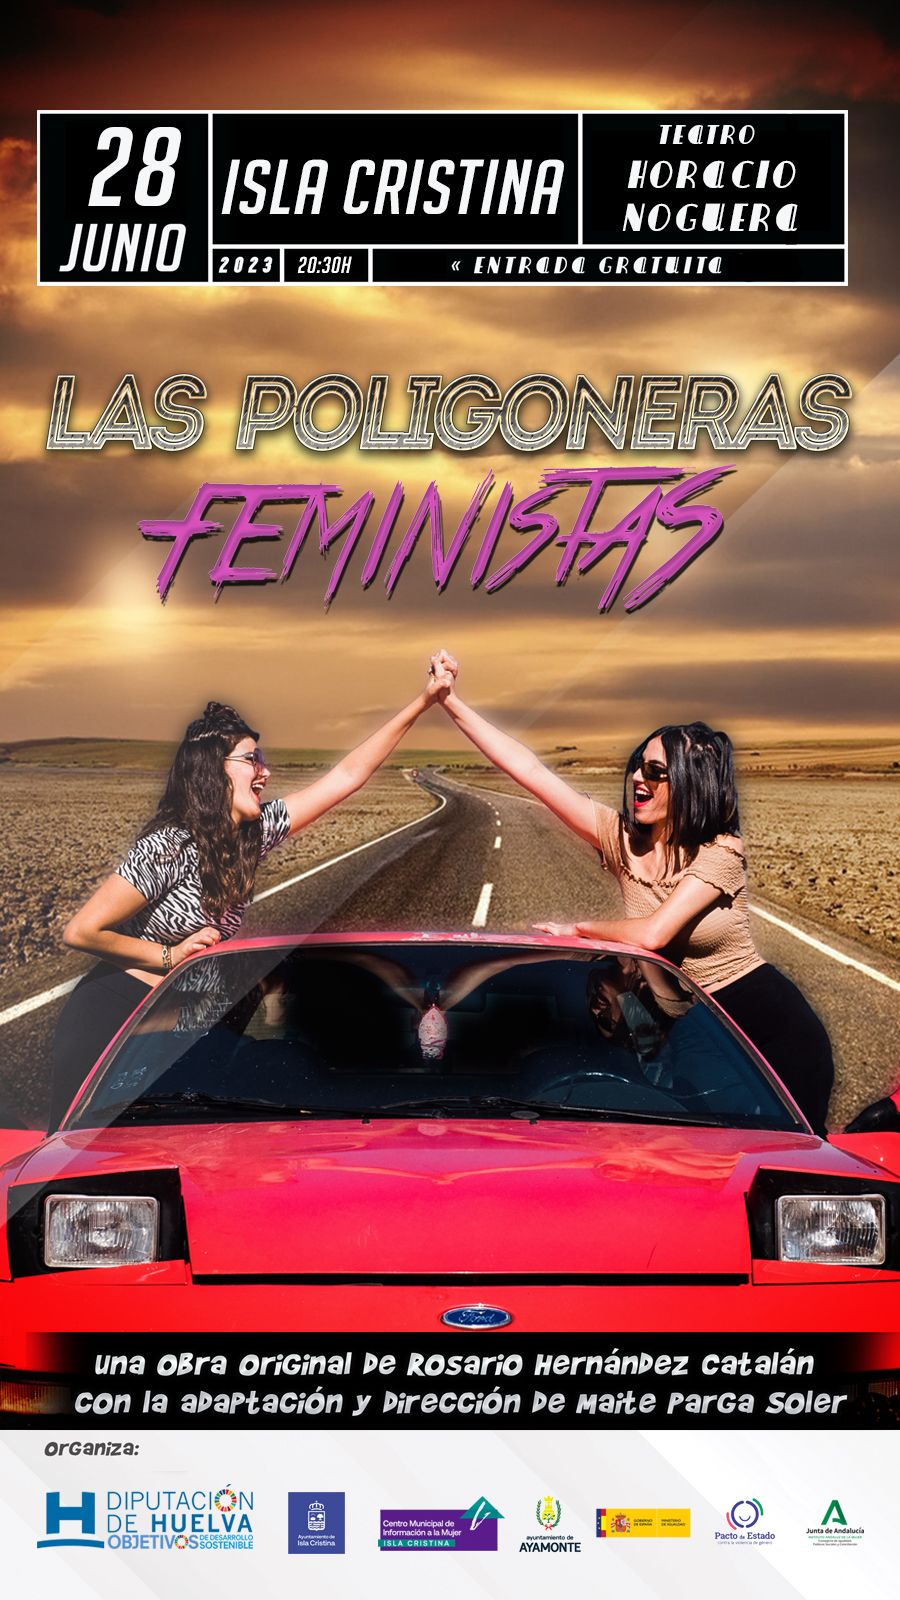 Las “poligoneras” Feministas desembarcarán en Isla Cristina